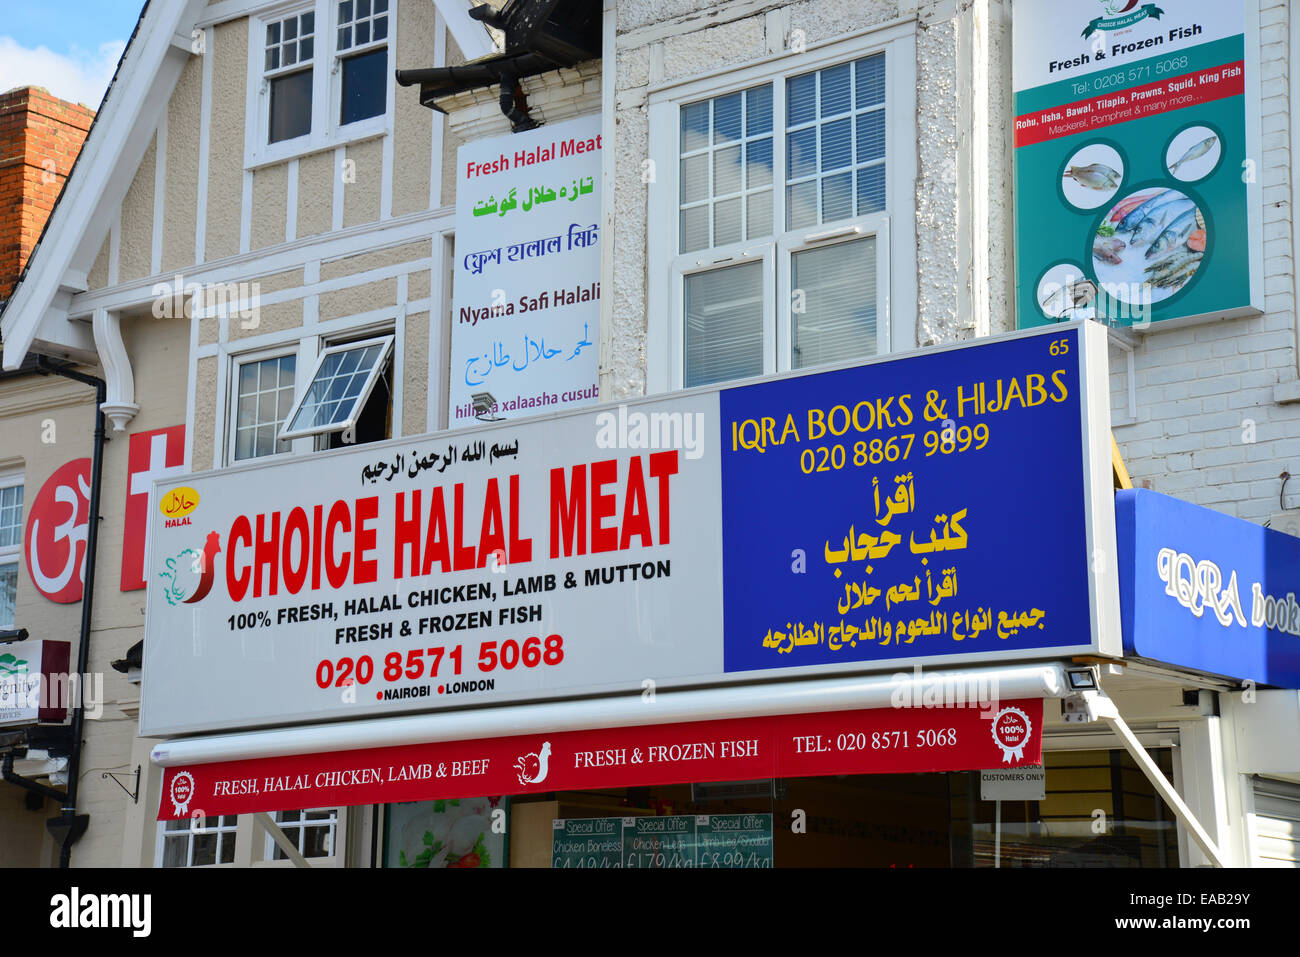 La viande halal shop sign, South Road, Hounslow, London Borough of Ealing, Greater London, Angleterre, Royaume-Uni Banque D'Images